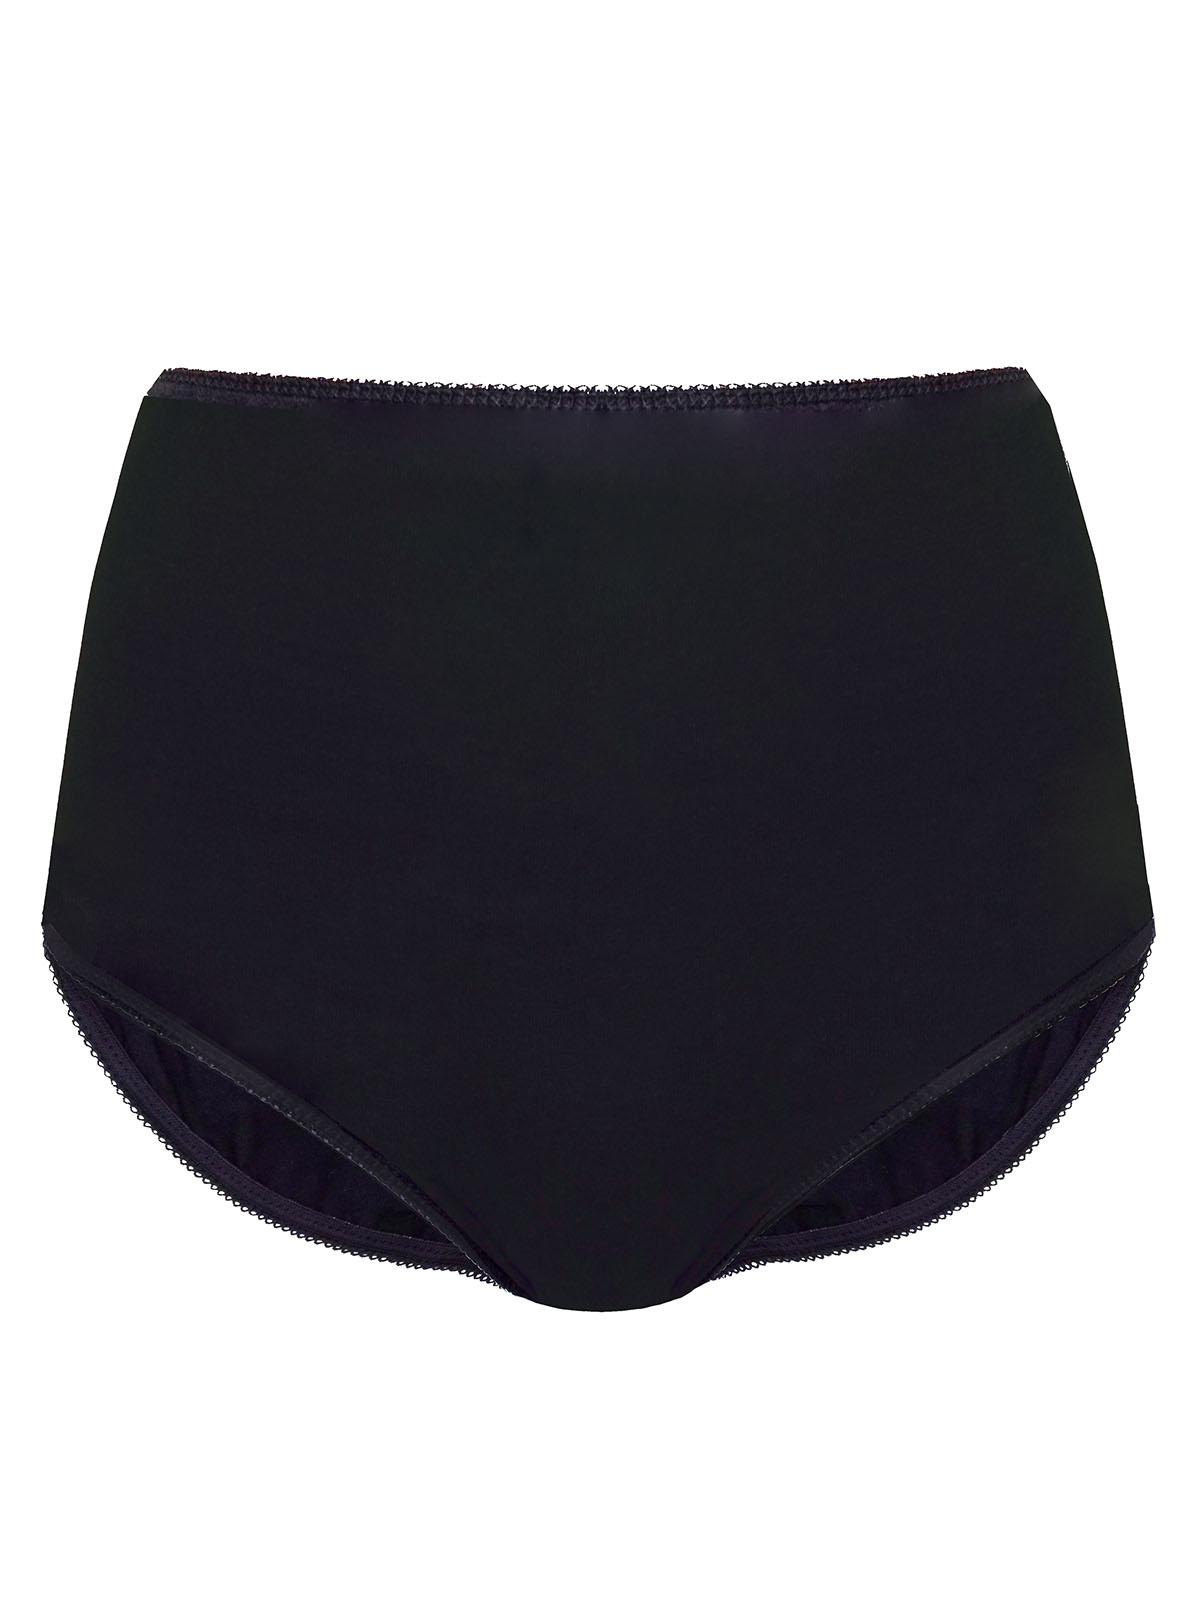 Sexy Black Thong Knickers Panties Primark Ladies Womens UK Sizes 6 to 16